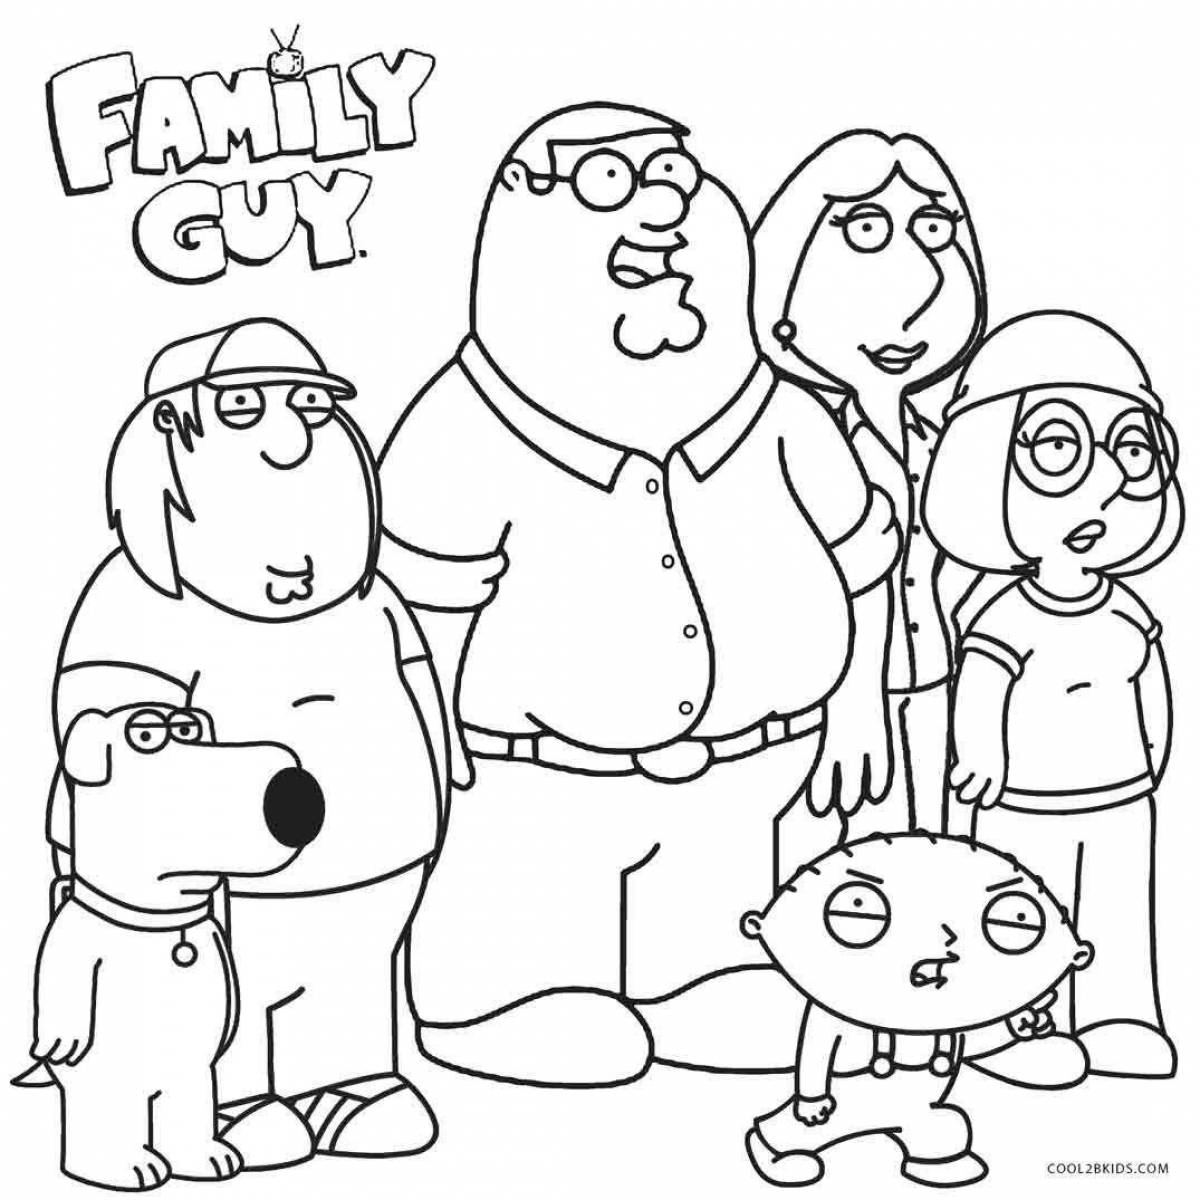 Adorable family coloring book